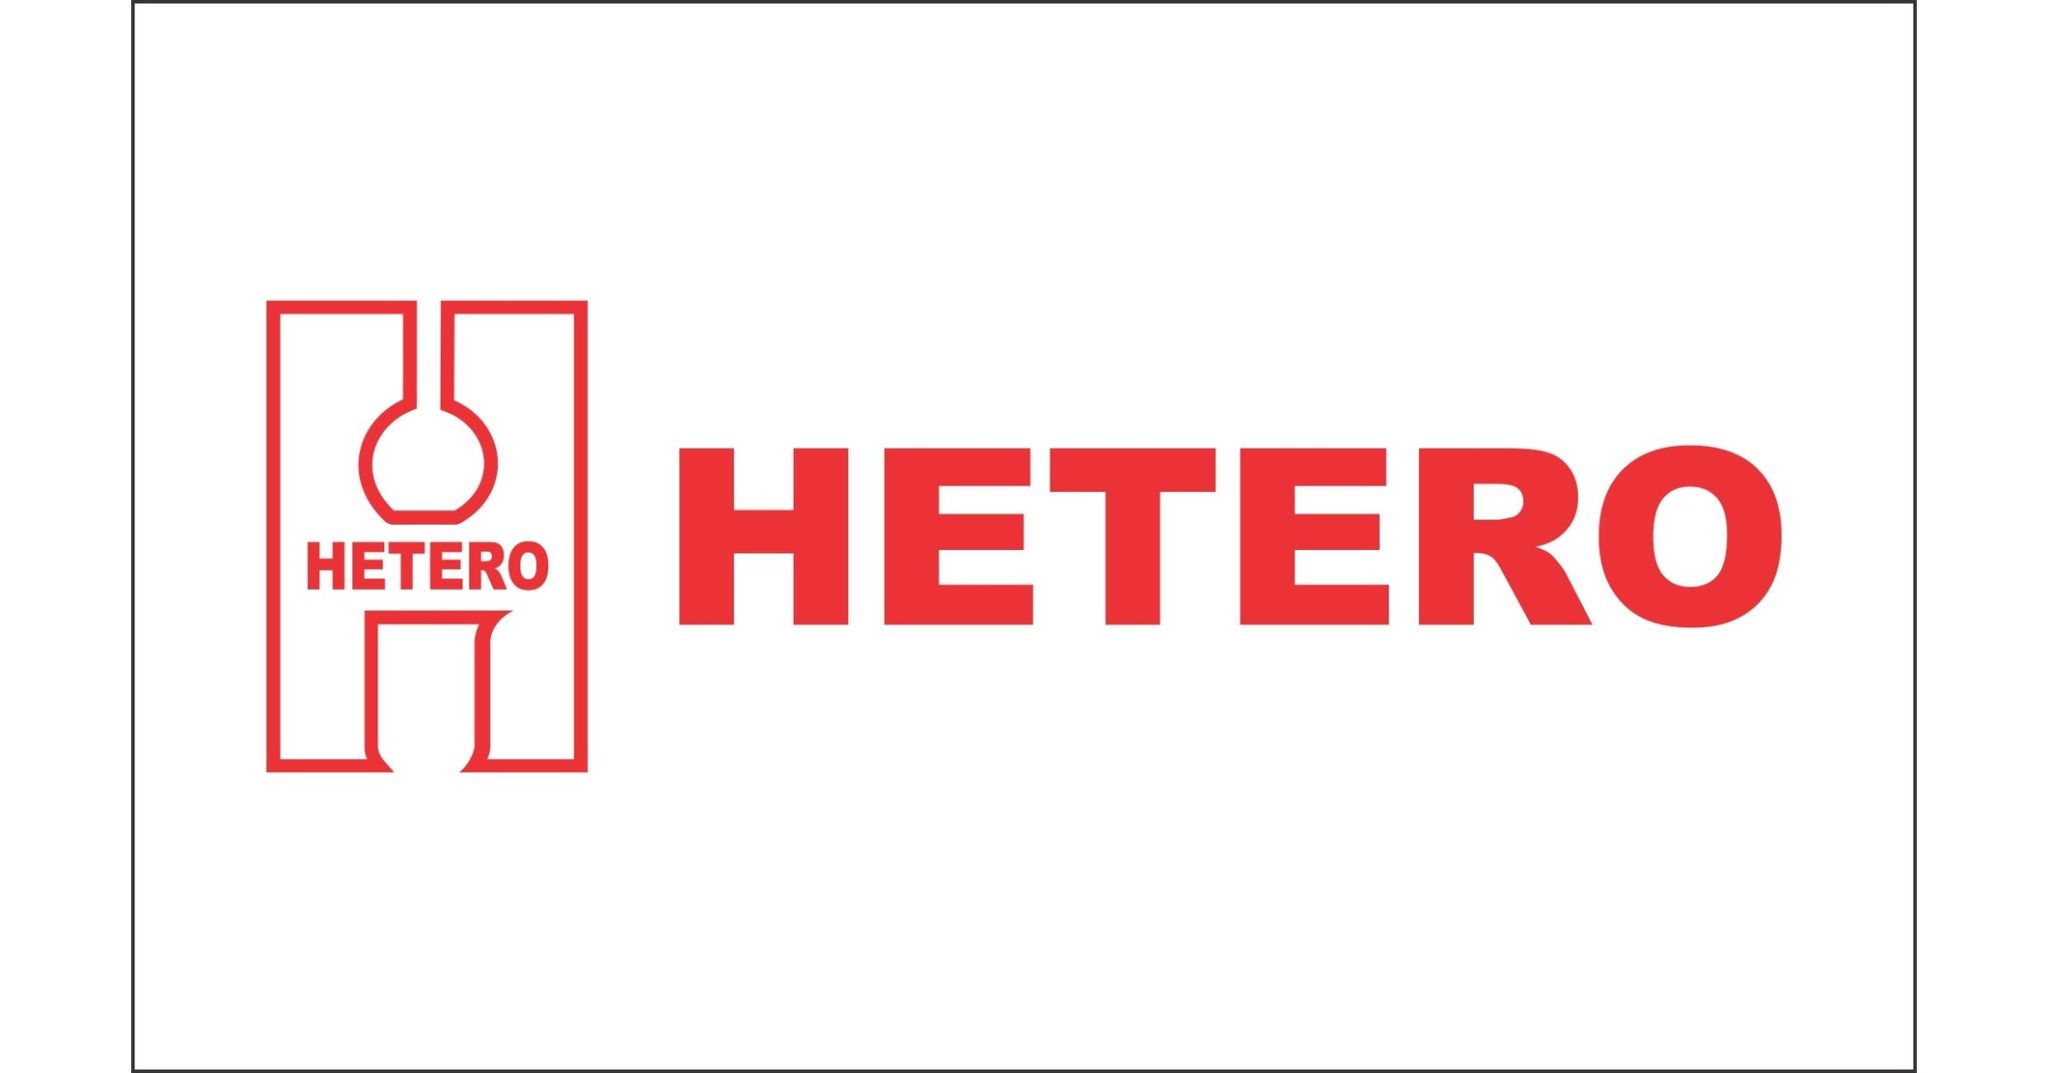 Hetero Logo